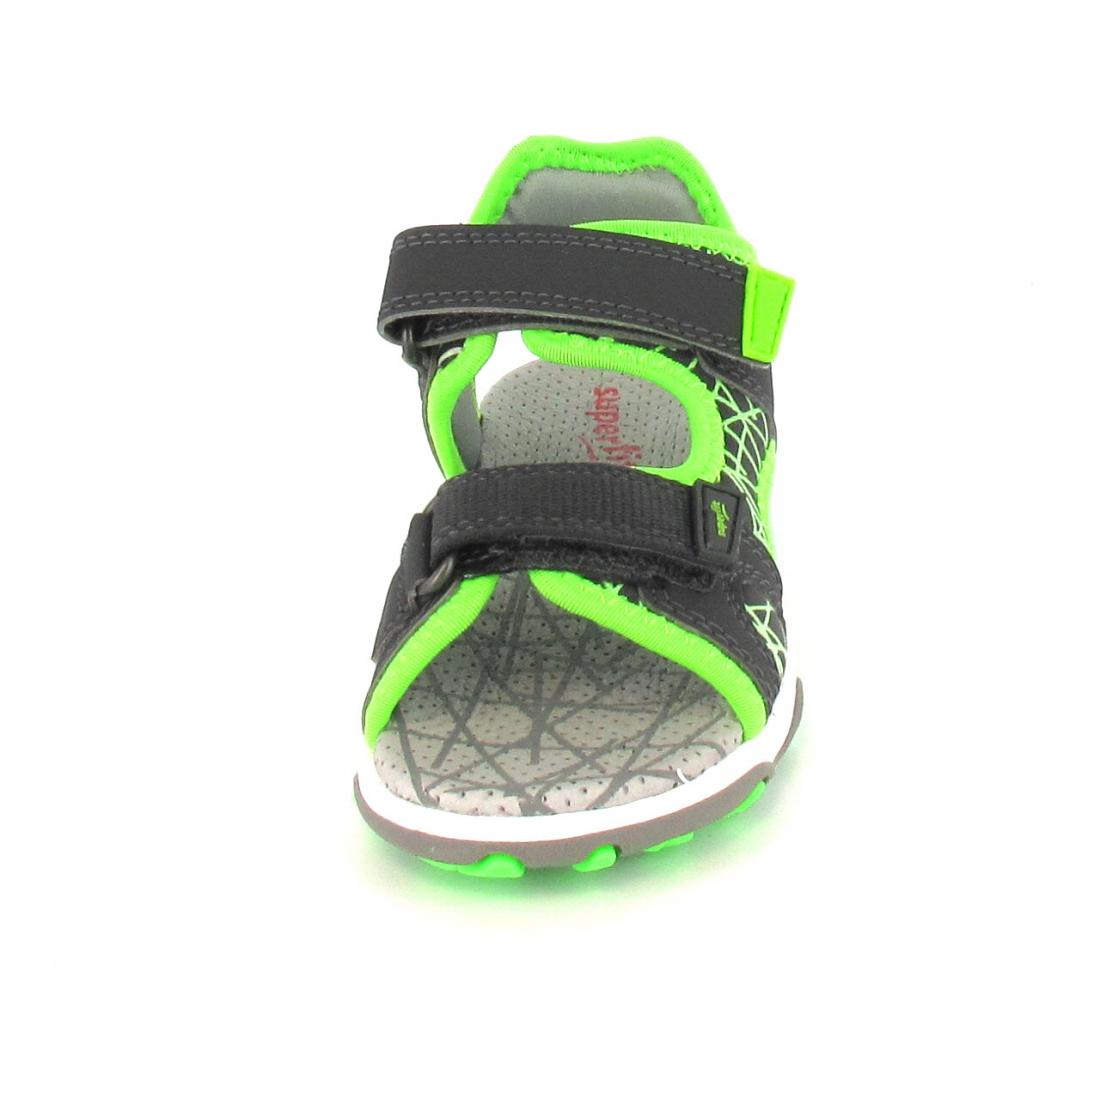 Mike günstig - 3.0 Sandalette | Wo Schuh-Welt Markenschuhe Superfit sind